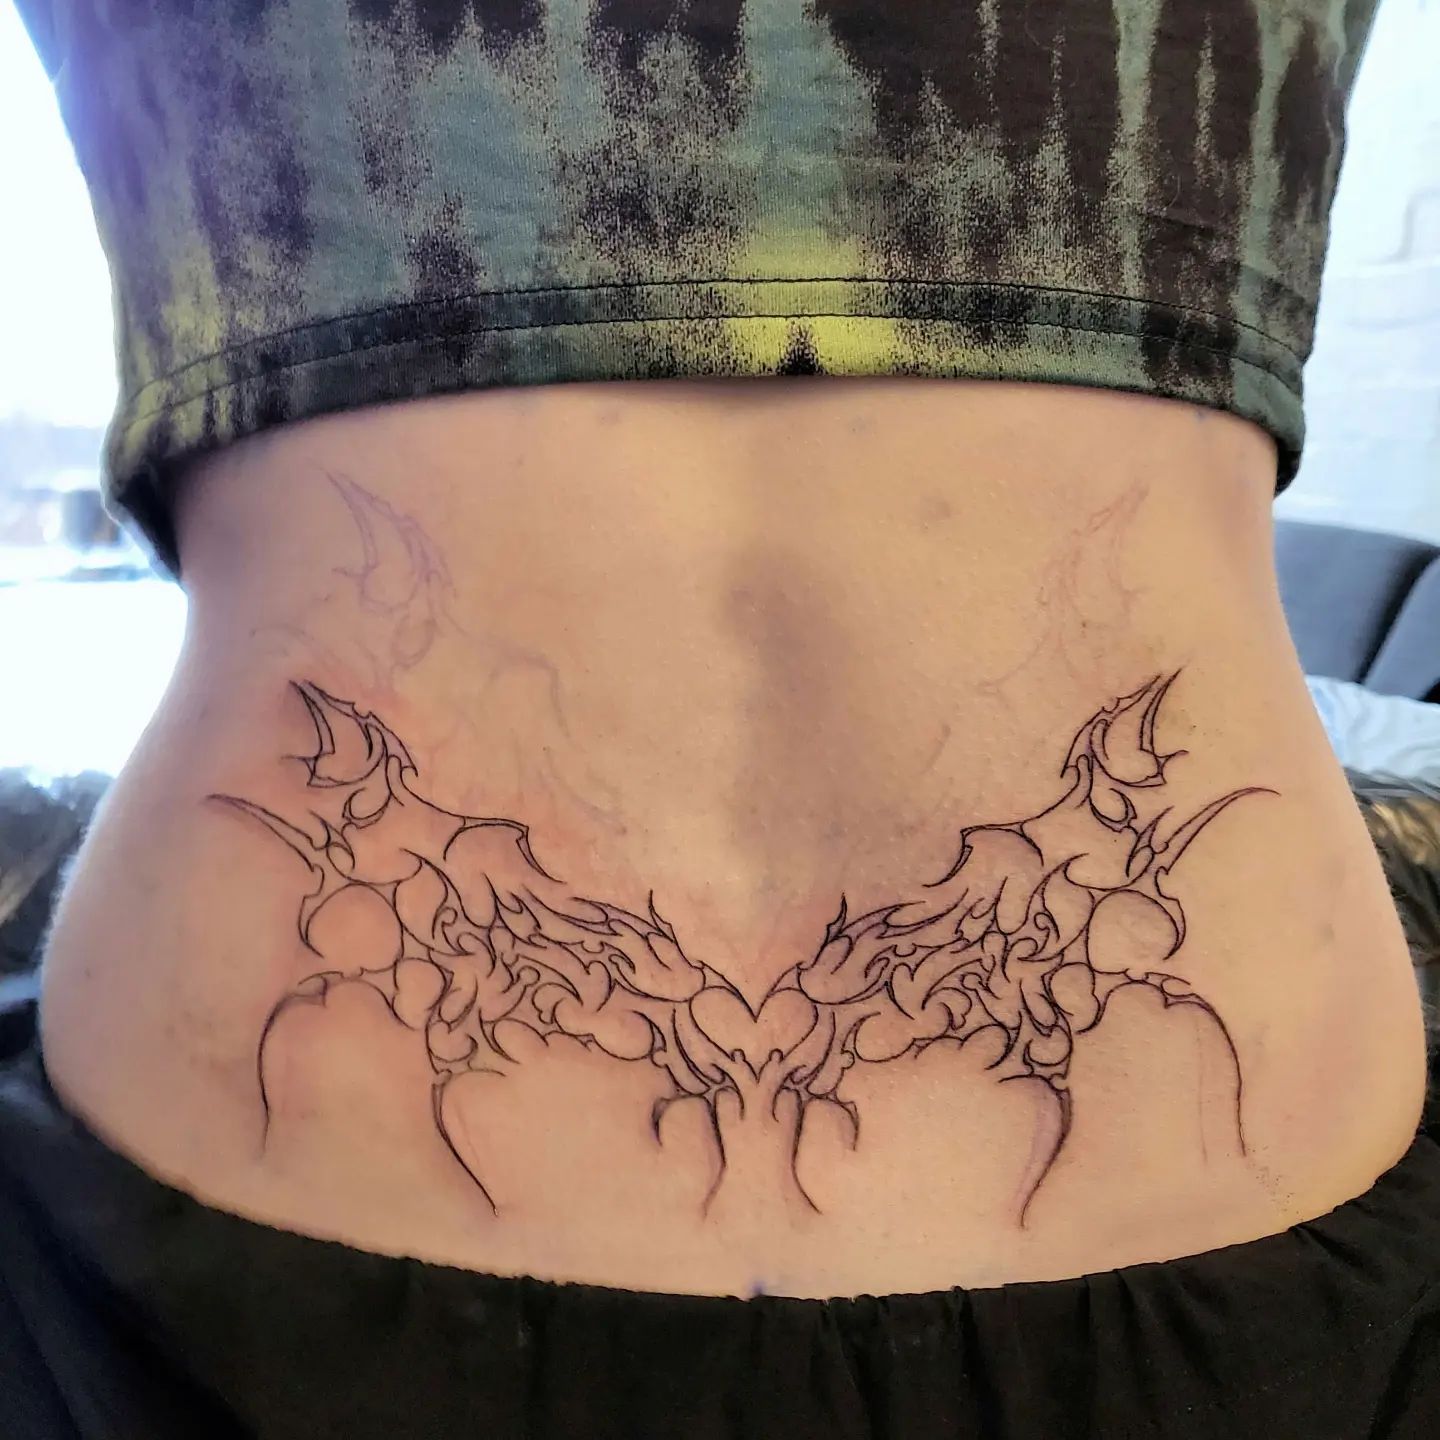 Tatuaje divertido en la parte baja de la espalda